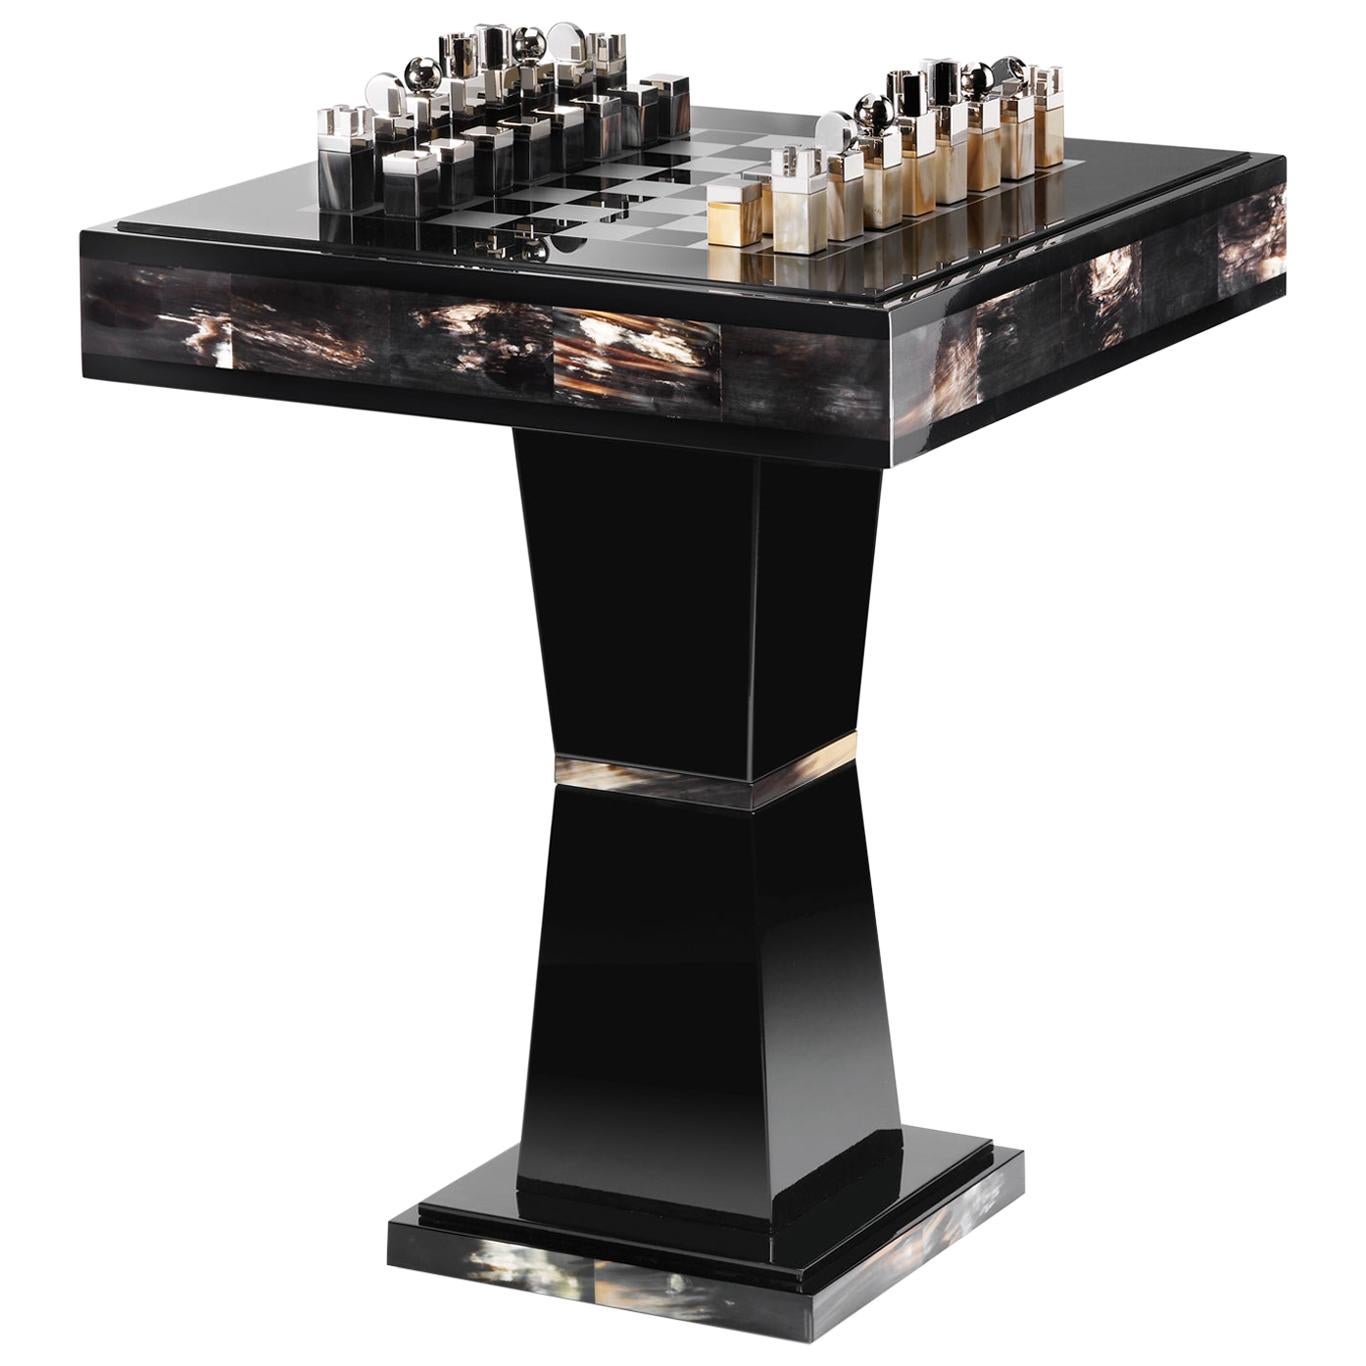 Table d'échecs Alfio en bois laqué noir brillant de Corno Italiano, Mod. 3244